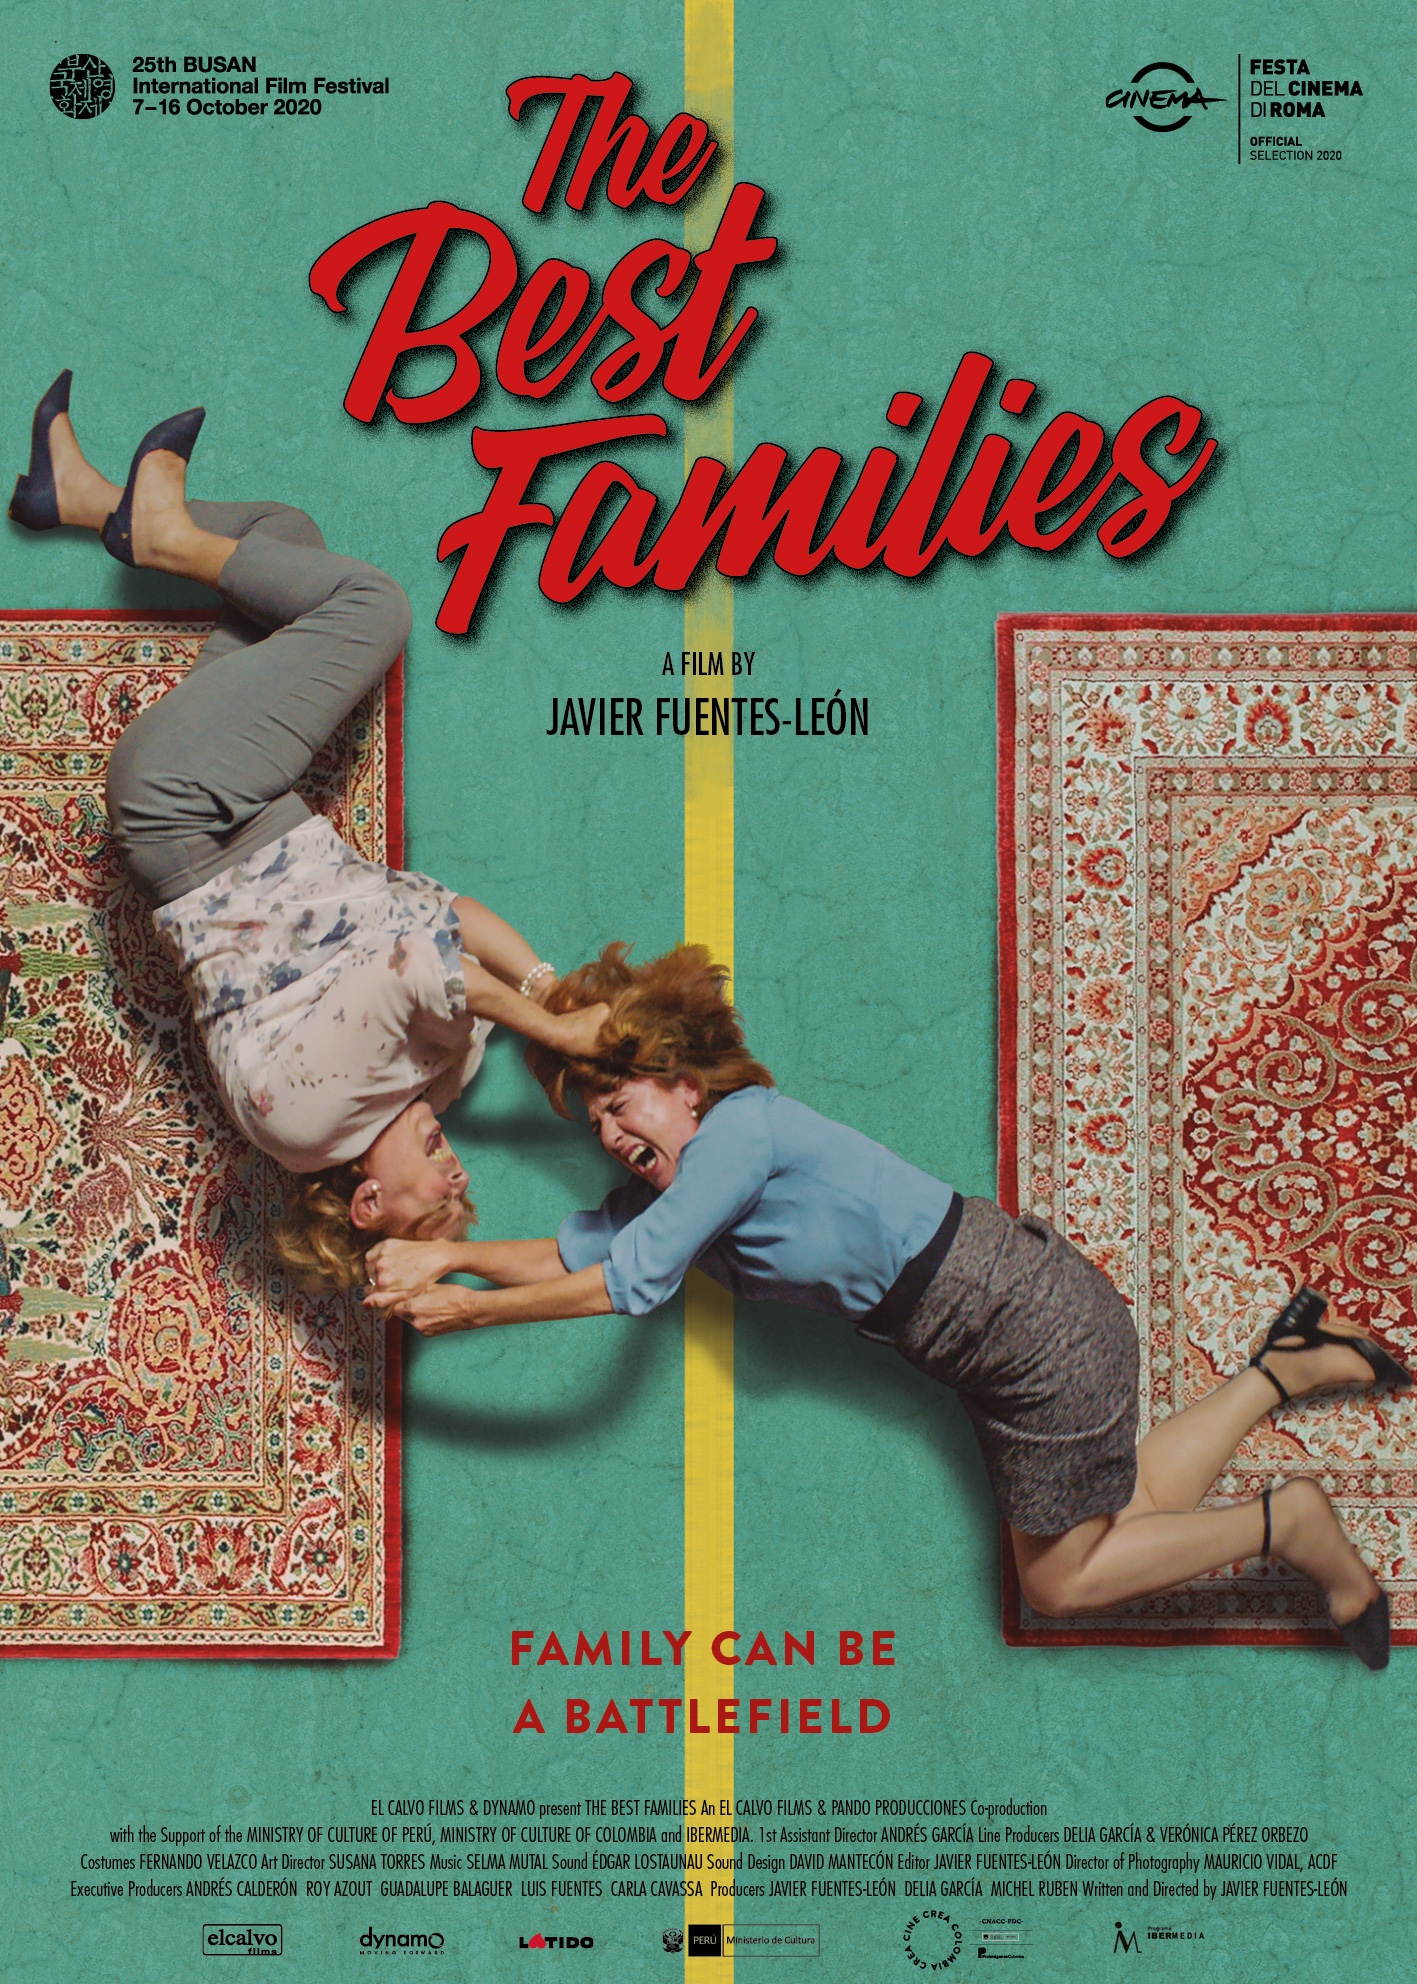 Las mejores familias (2020)